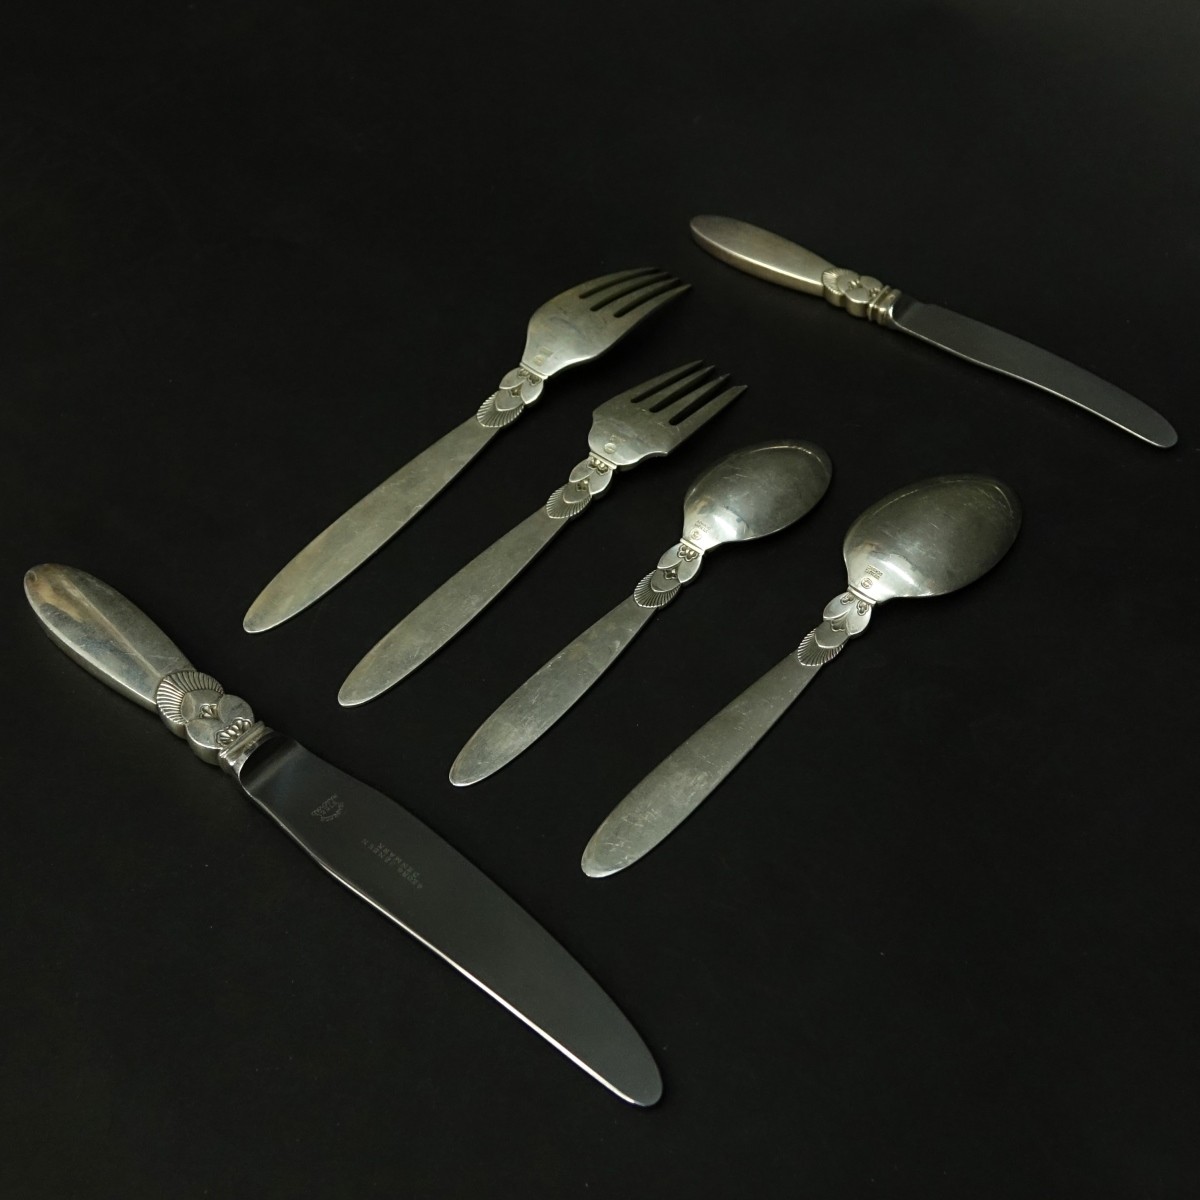 silverstack knifes